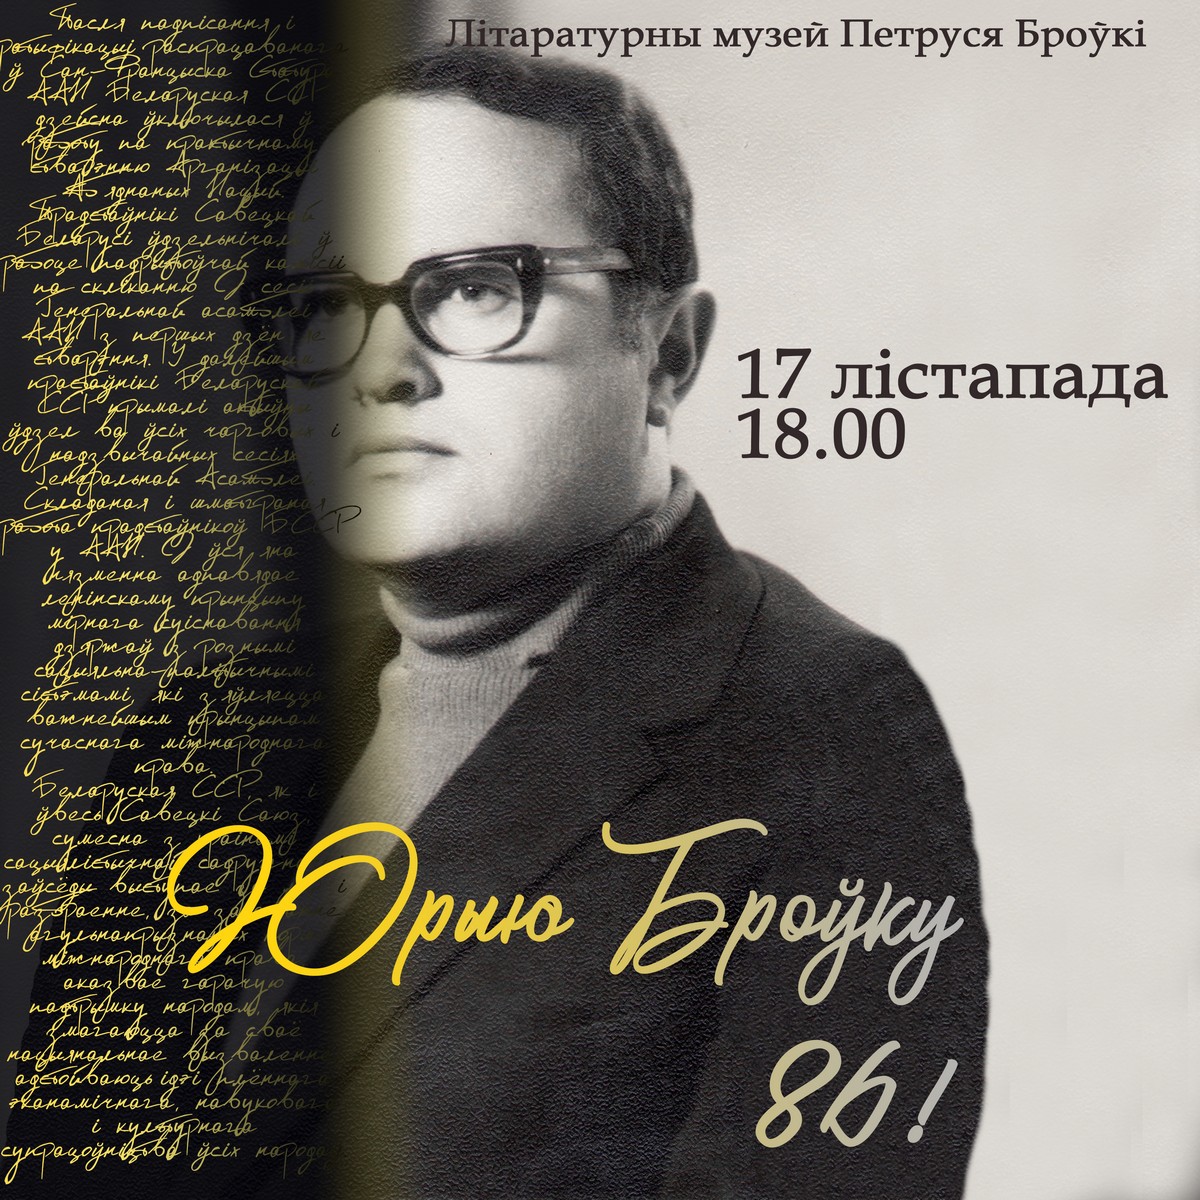 “Юрыю Броўку – 86!”